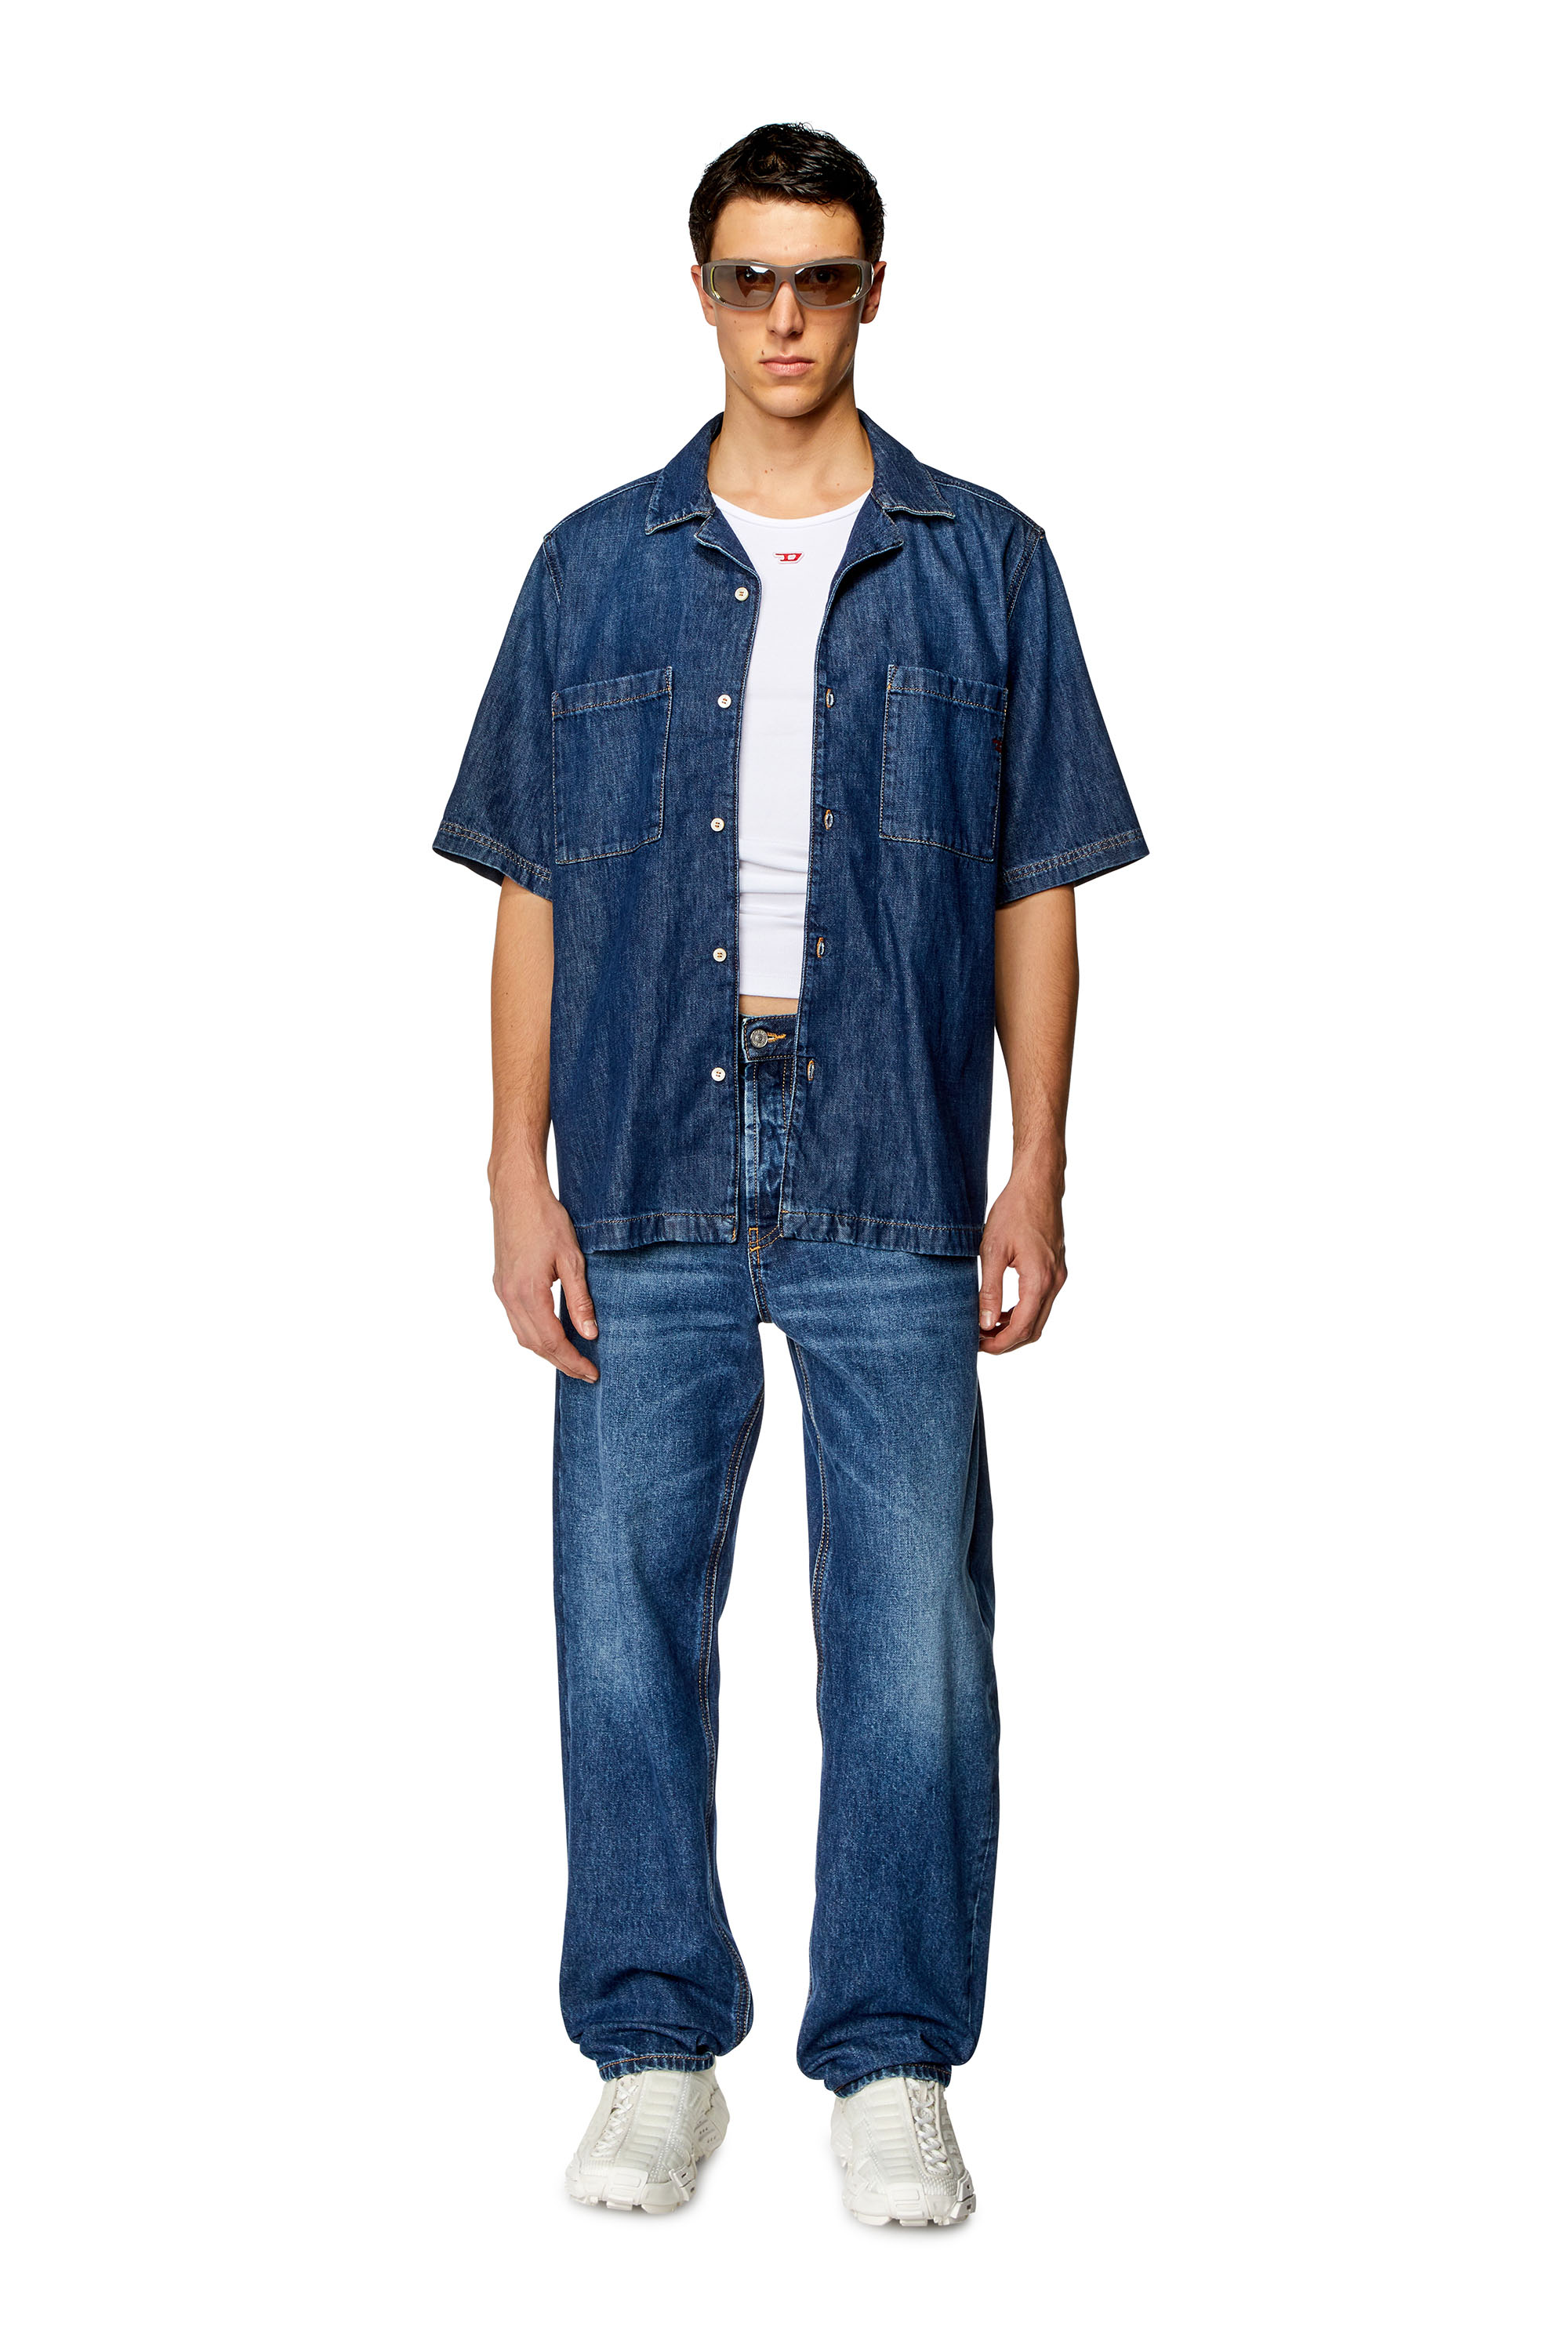 Diesel - D-PAROSHORT, Male Bowling shirt in denim in Blue - Image 4